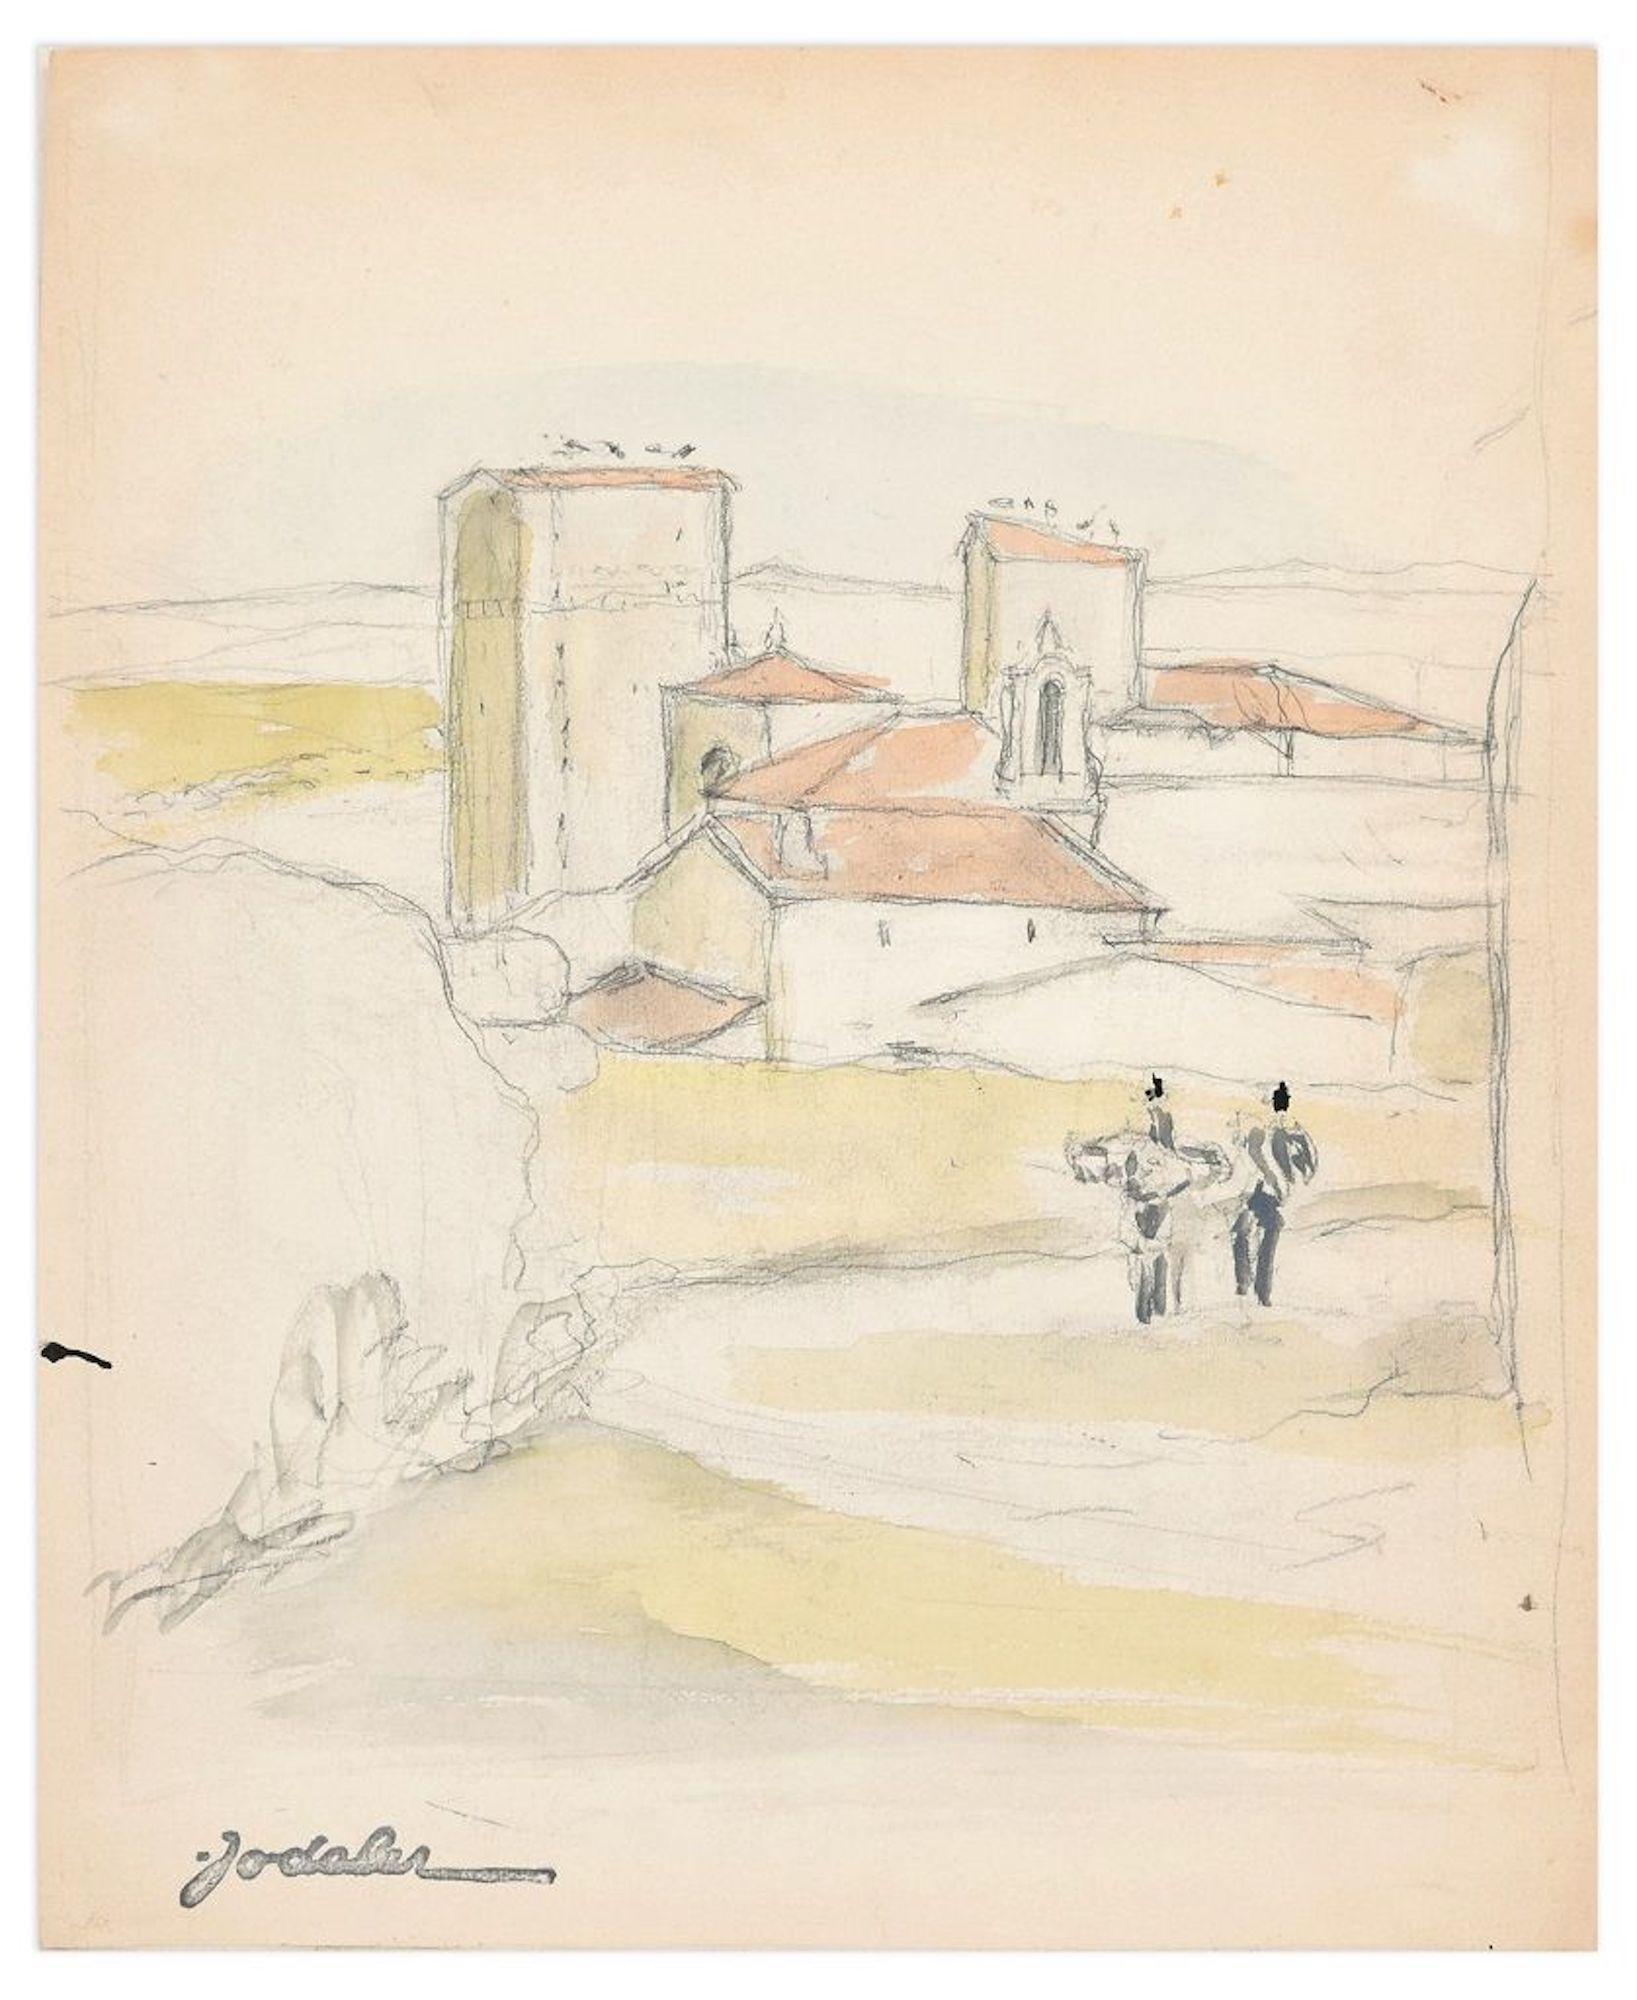 Emmanuel Charles Jodelet Landscape Art - Landscape - Original Pencil and Watercolor by E.C. Jodelet - Mid 20th Century